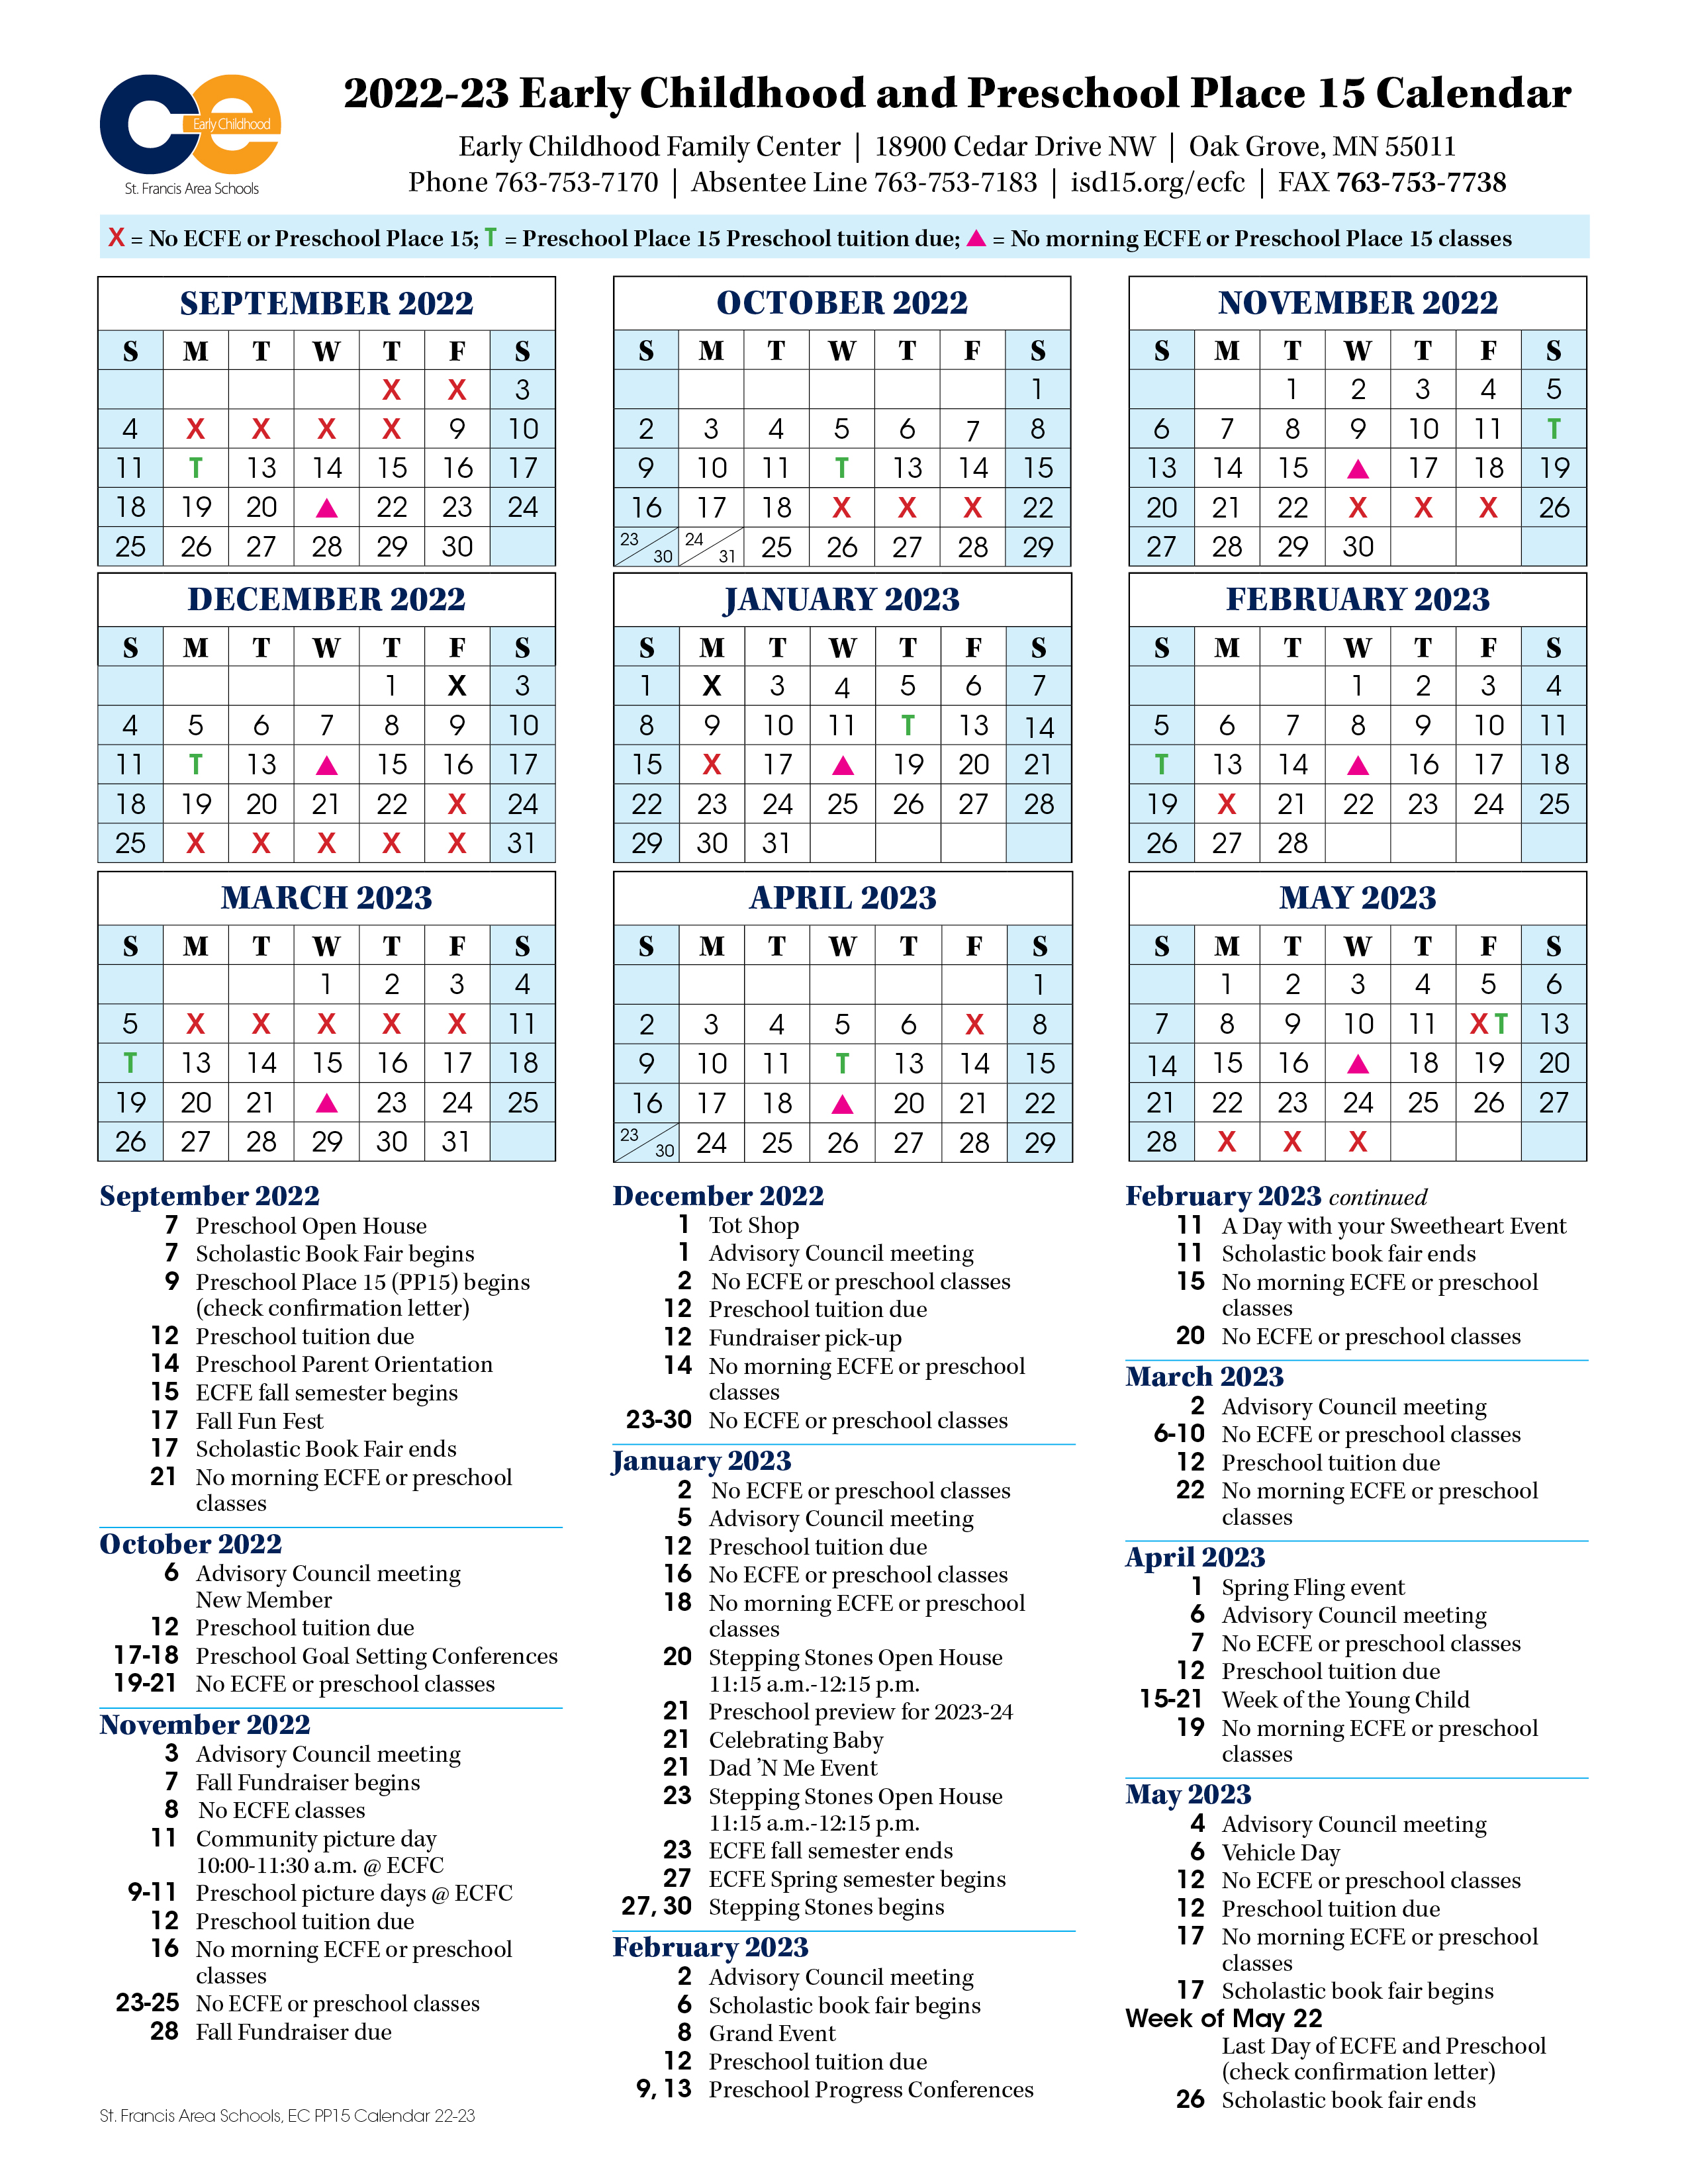 ECFE and Preschool Place 15 calendar for 2022-23 school year